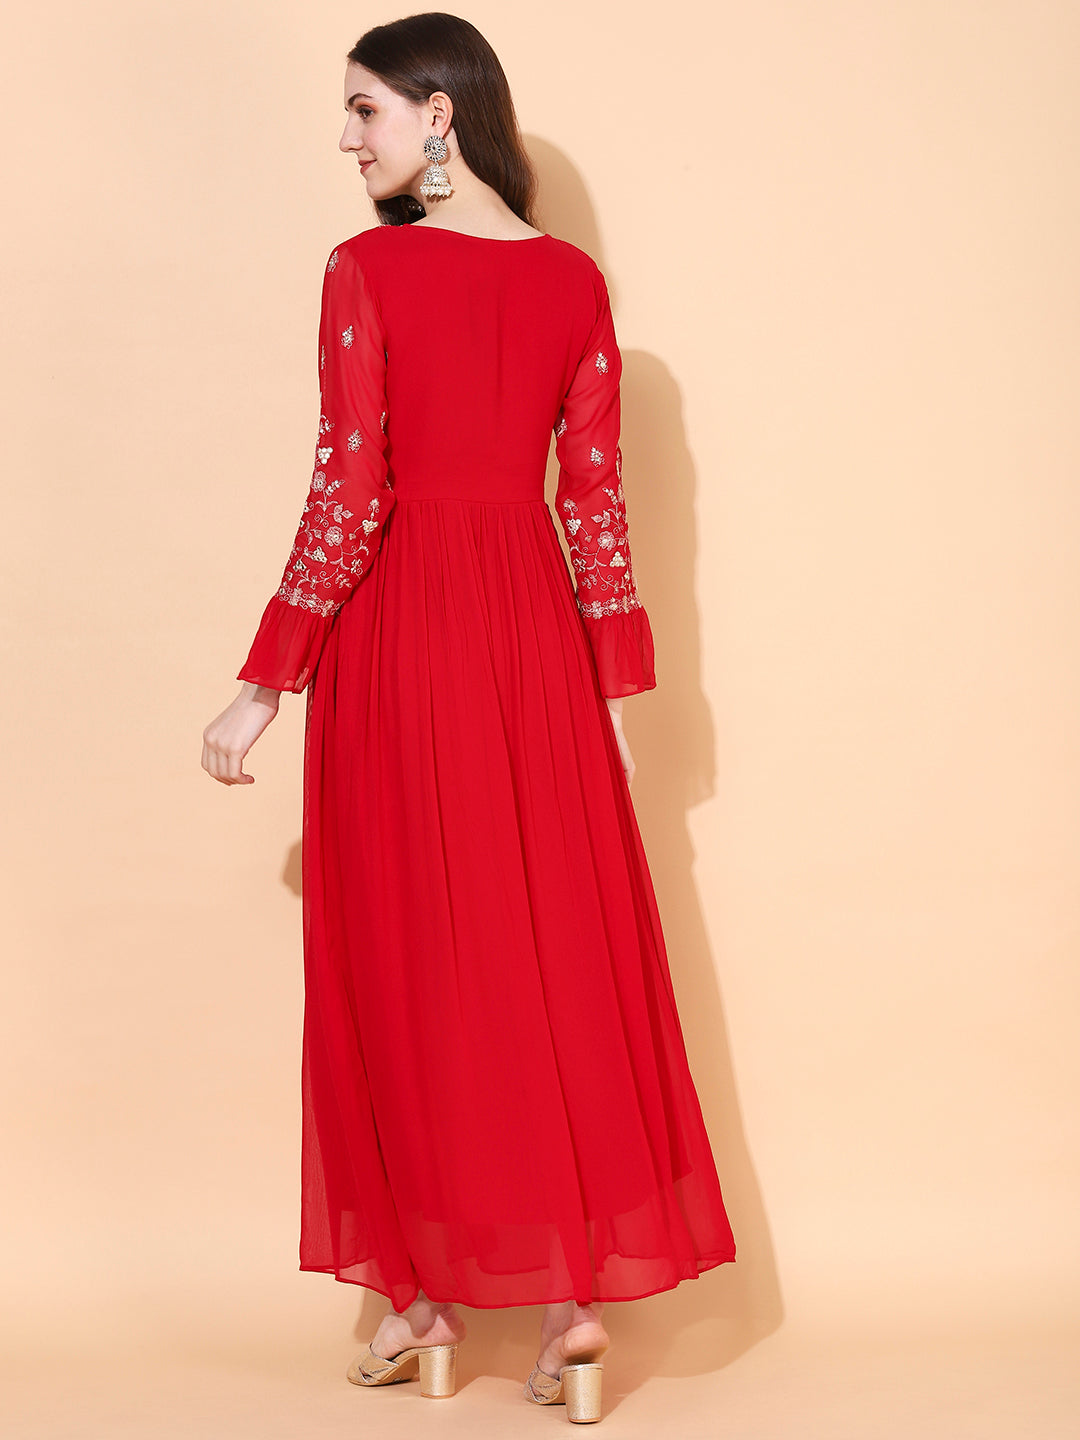 Hot Dresses  Buy Hot Dresses online in India